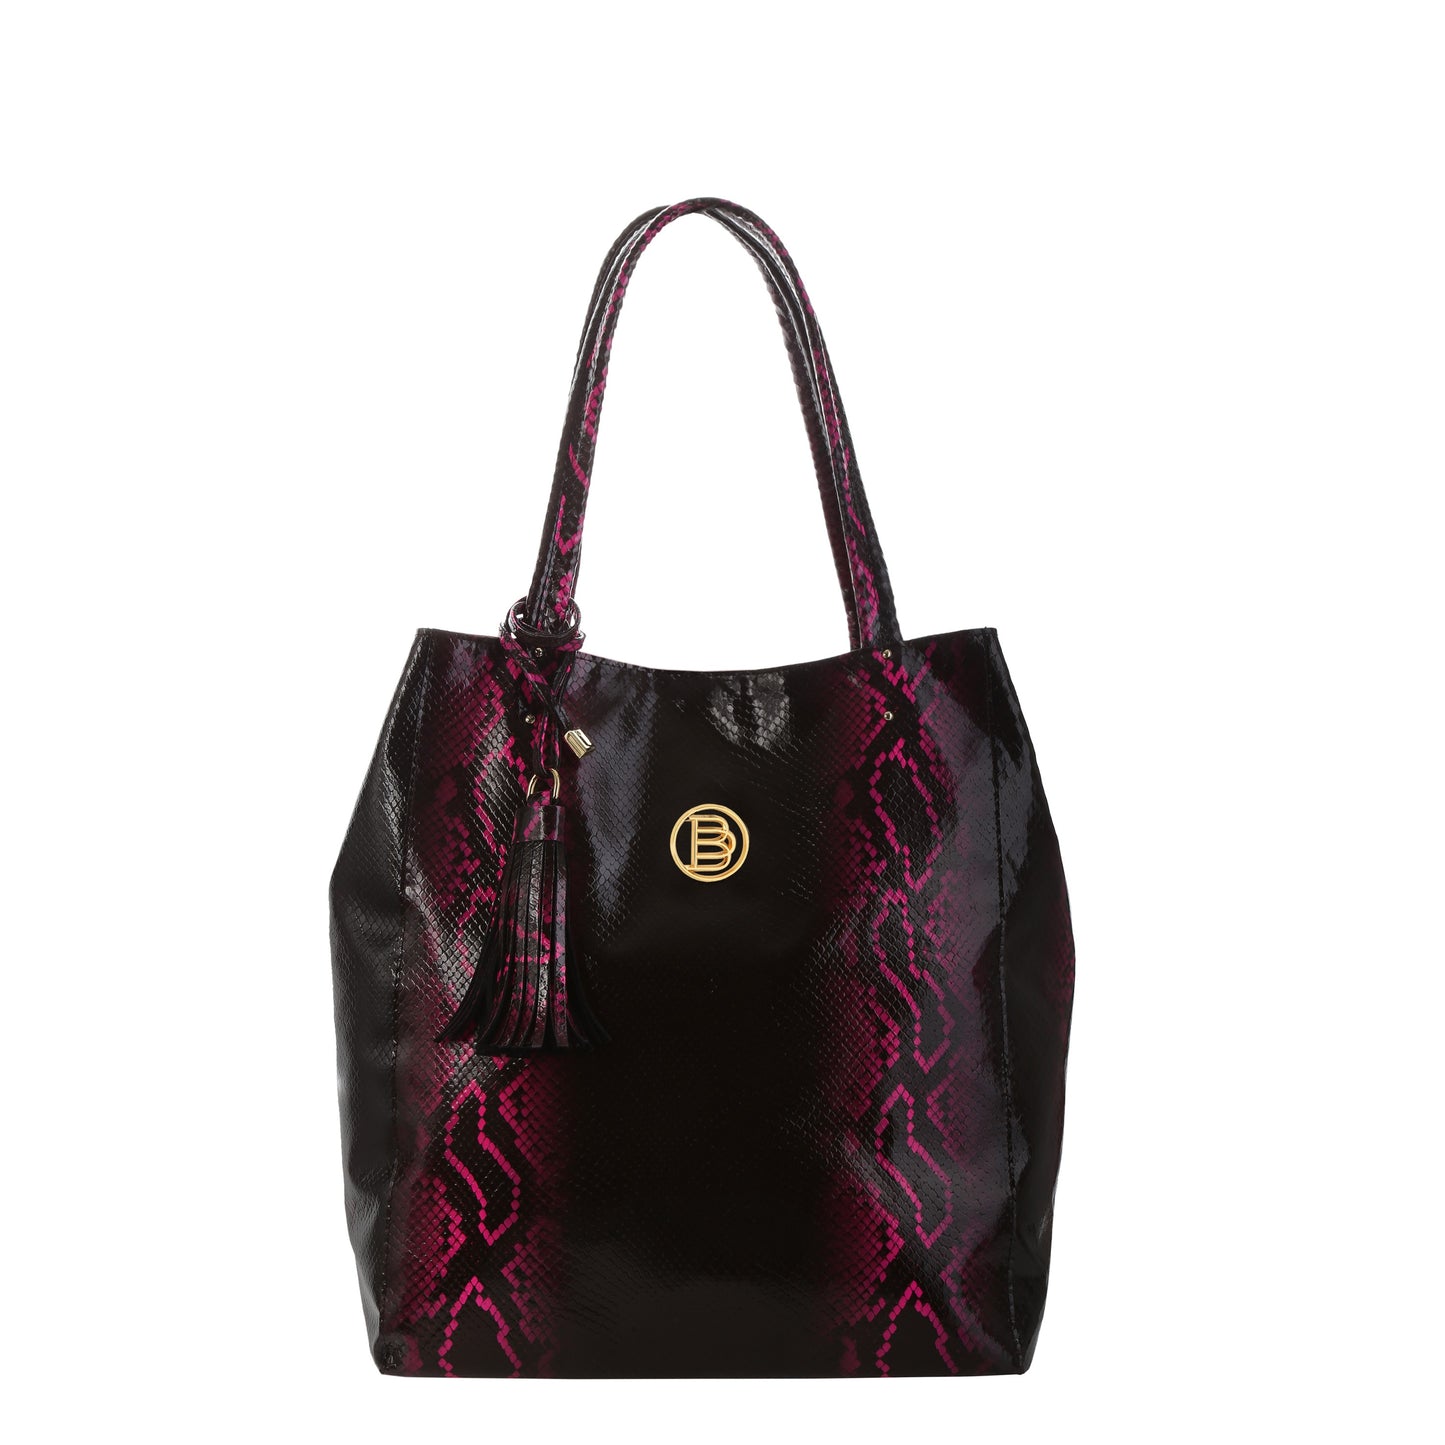 BAKU CASPER BLACK women's leather handbag